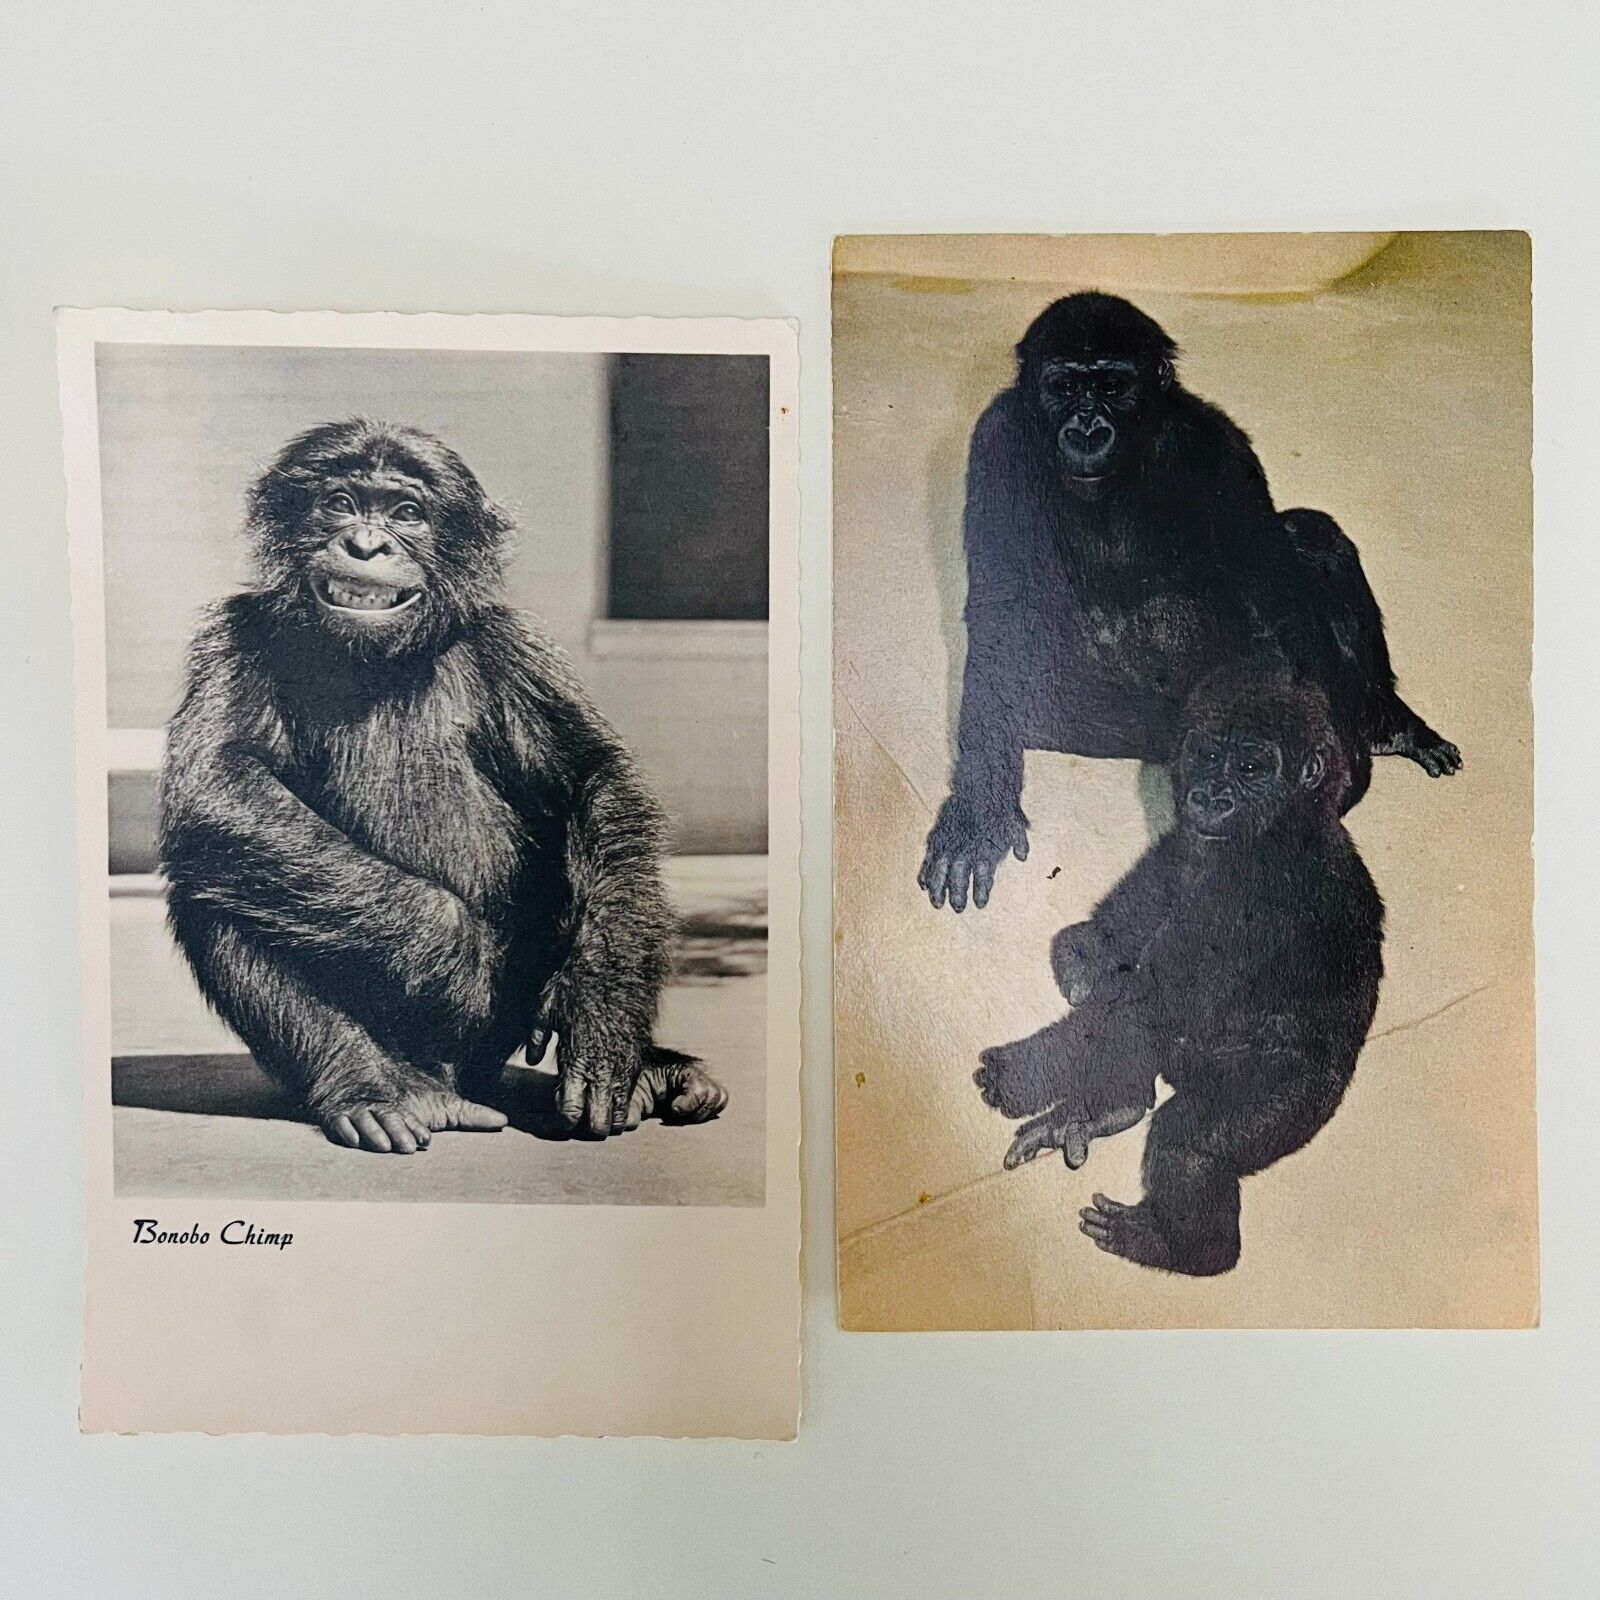 Lot of 2 Vintage Monkey Postcards - Baby Gorilla\'s San Diego Zoo - Bonobo Chimp